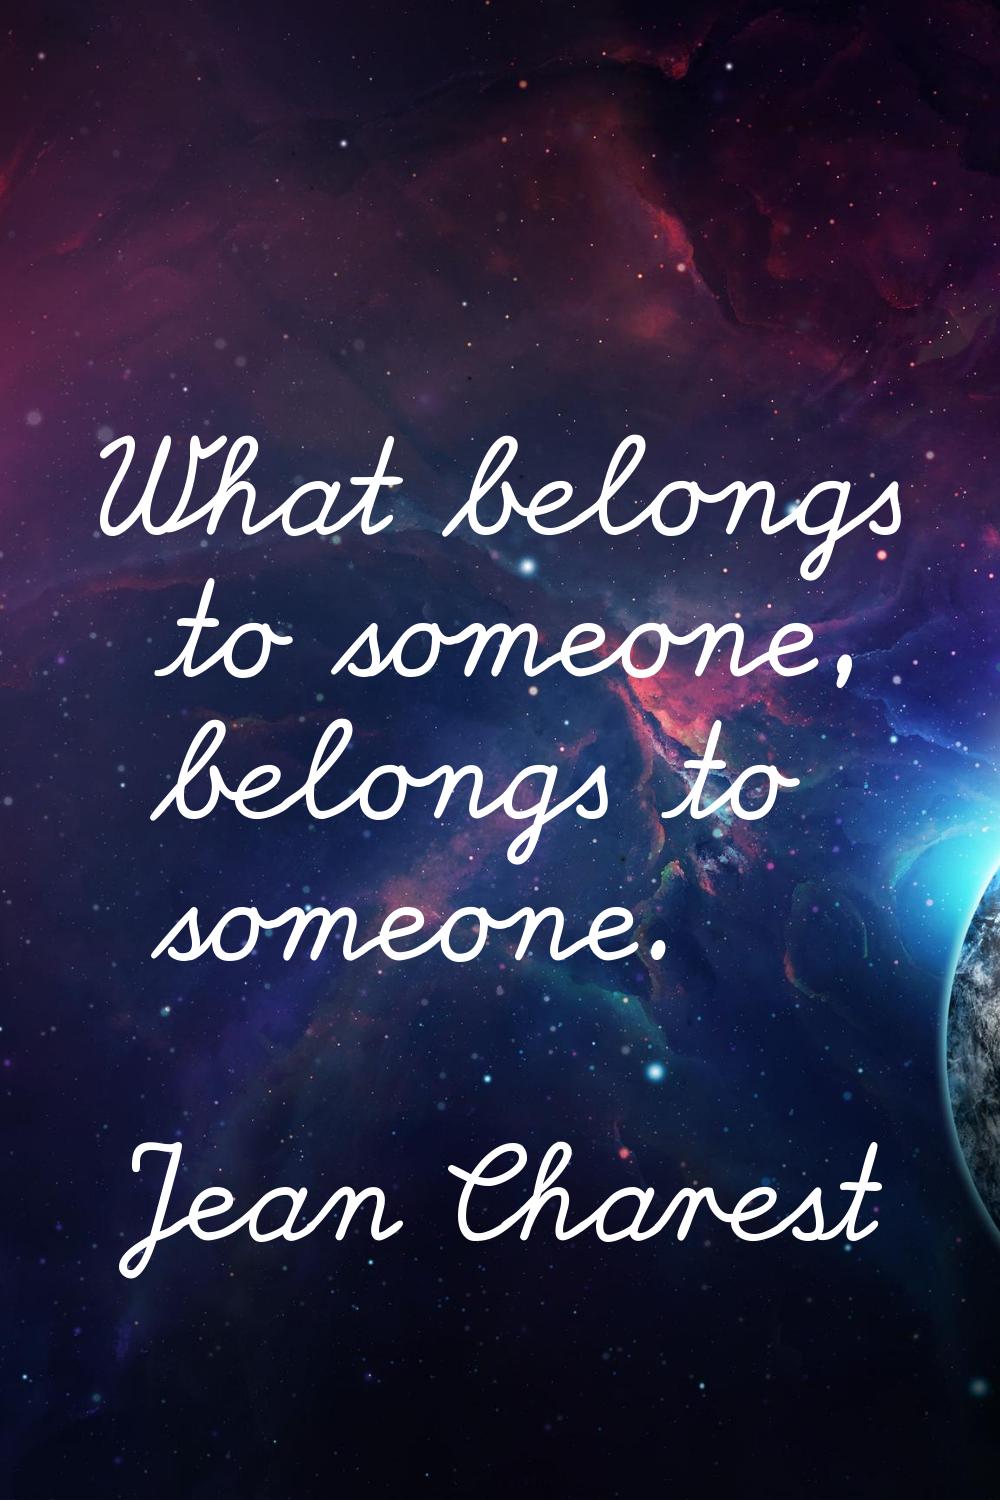 What belongs to someone, belongs to someone.